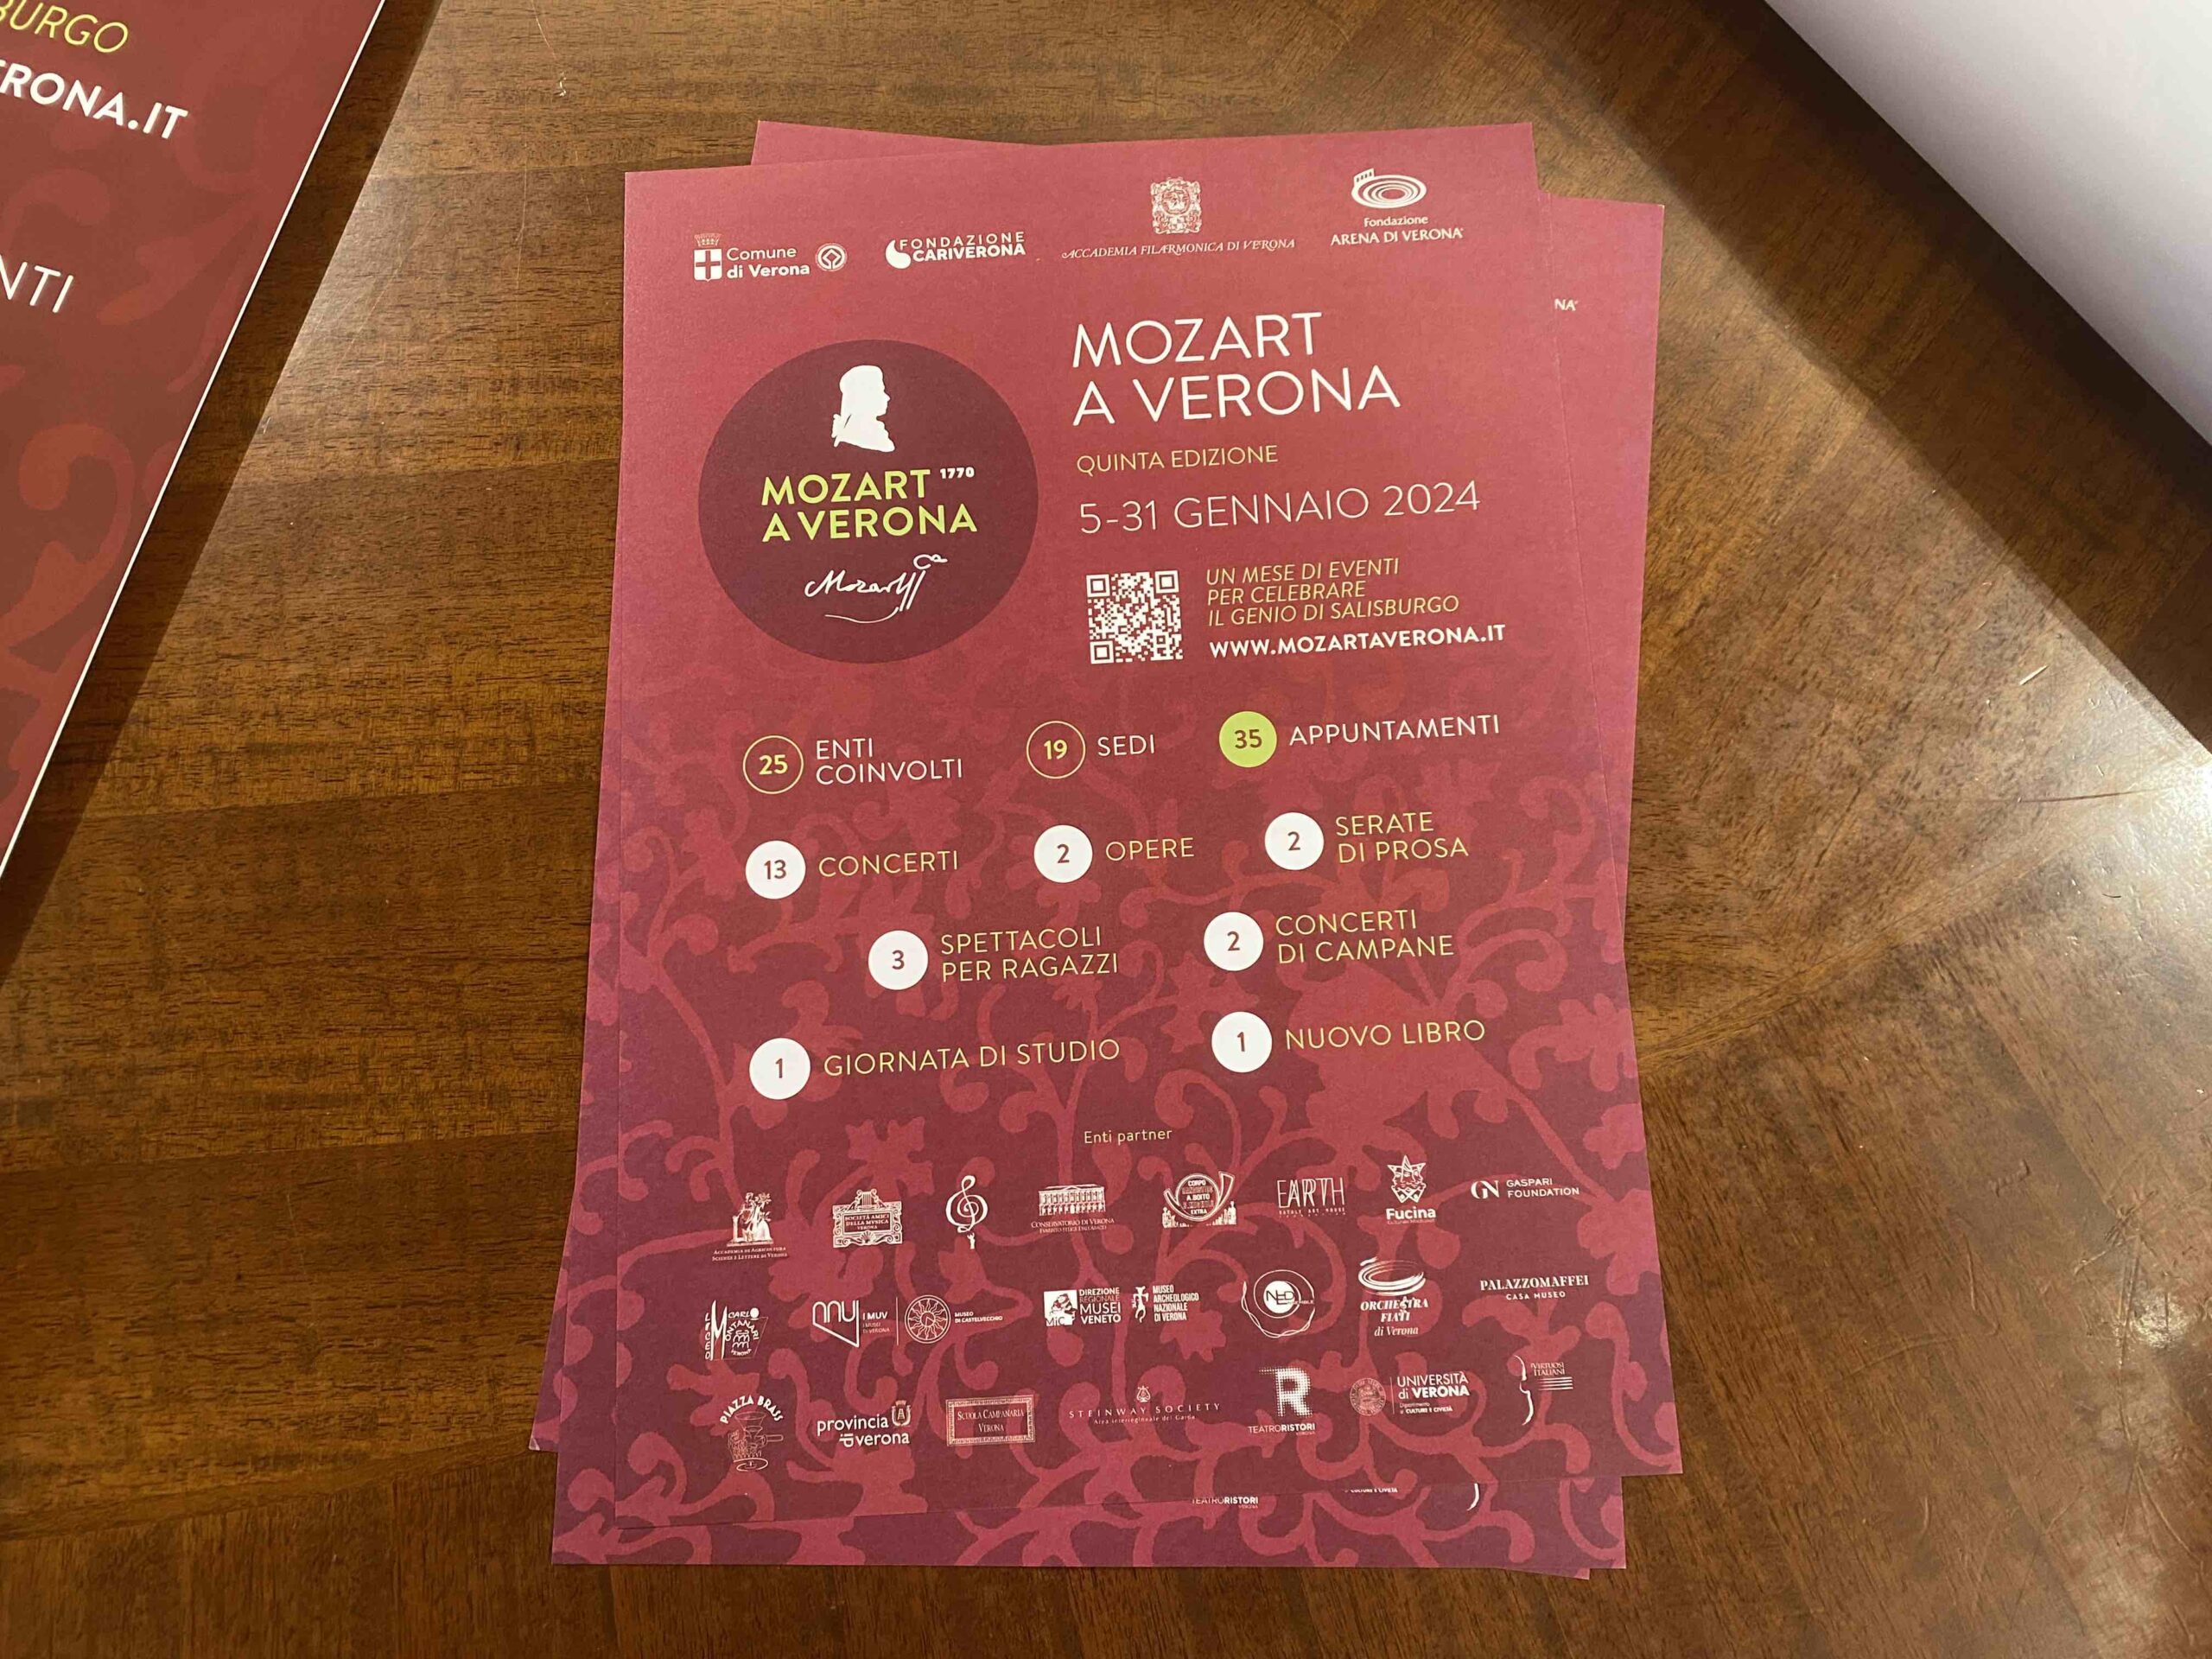 Al via la seconda settimana di “Mozart a Verona”. Dal 10 gennaio al 15 gennaio